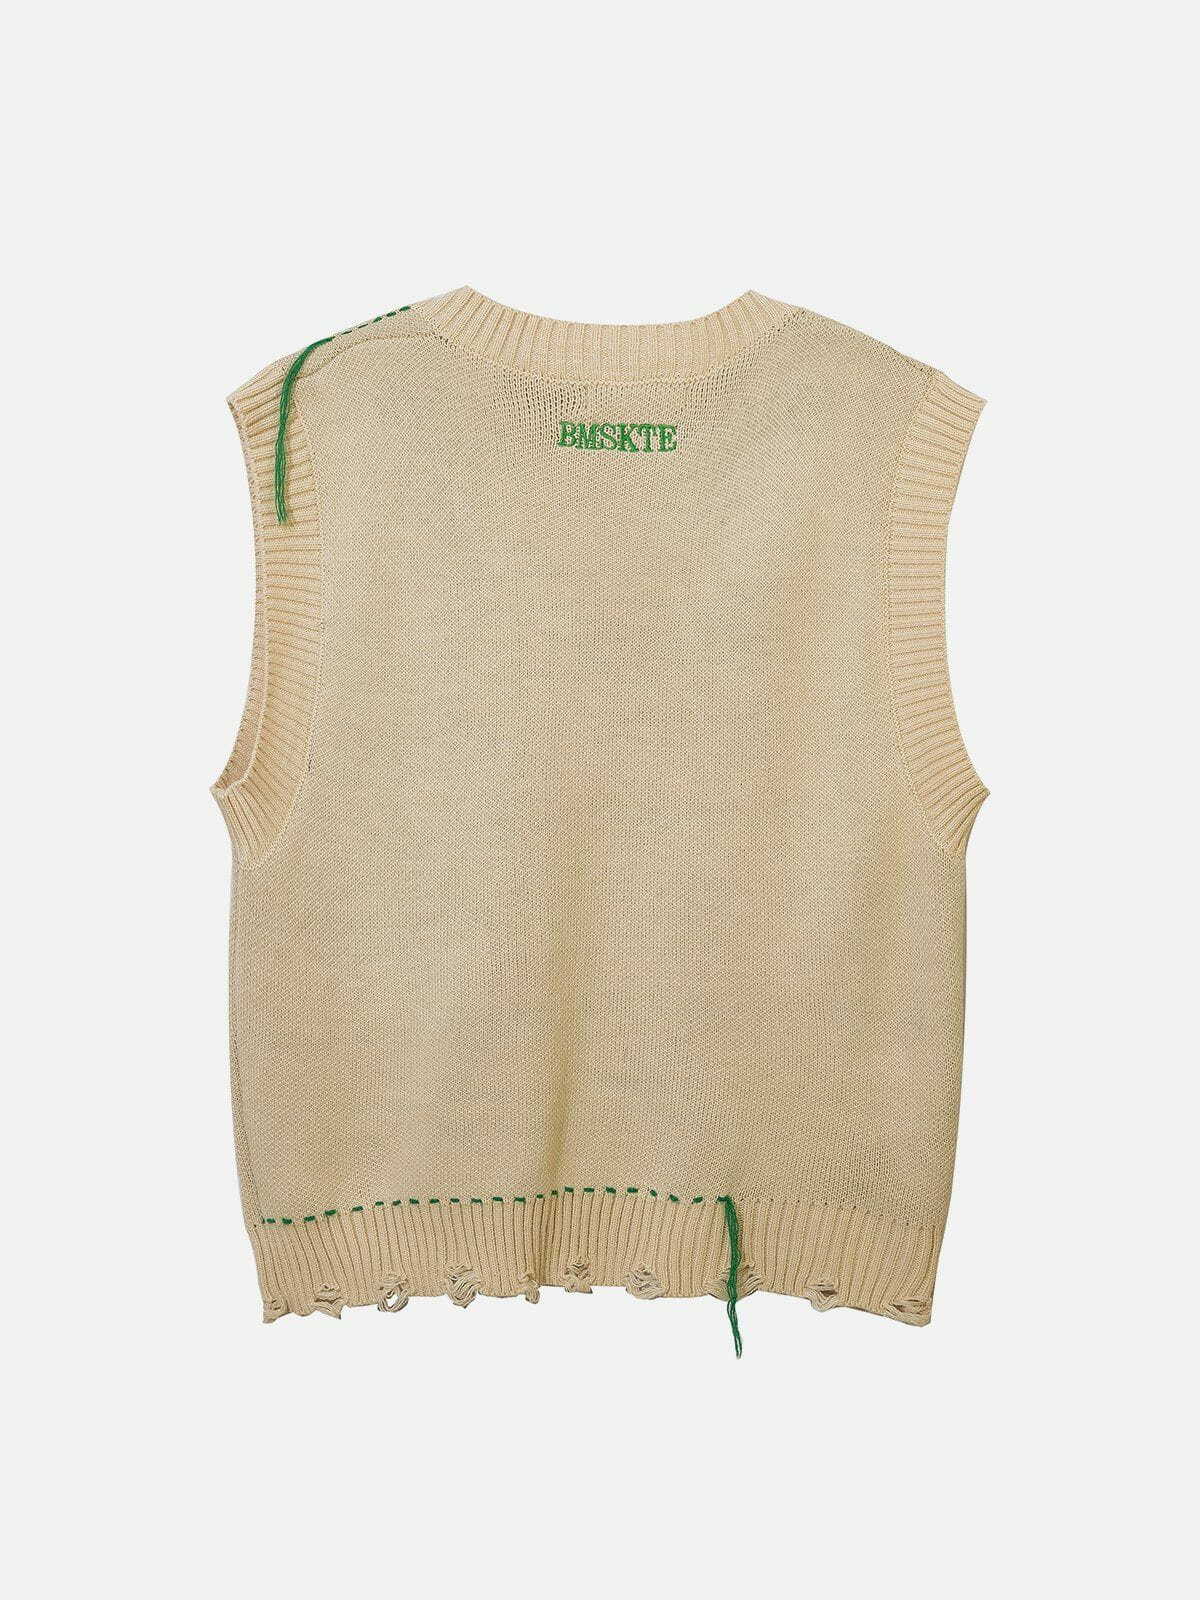 flower print sweater vest quirky y2k fashion essential 7669